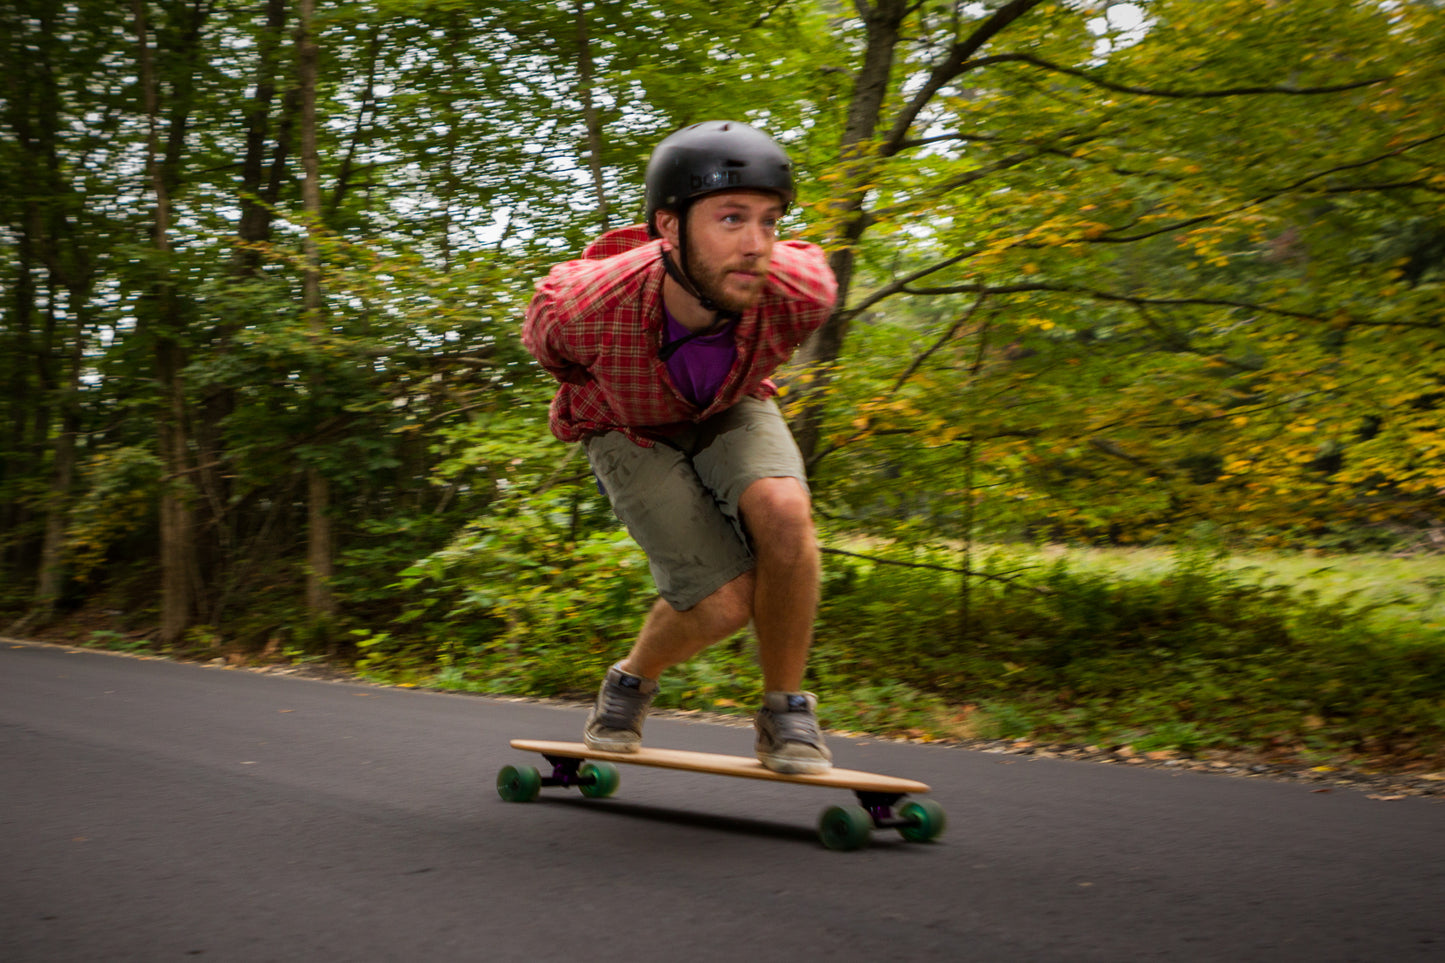 Grain Skateboards: Cider Hill